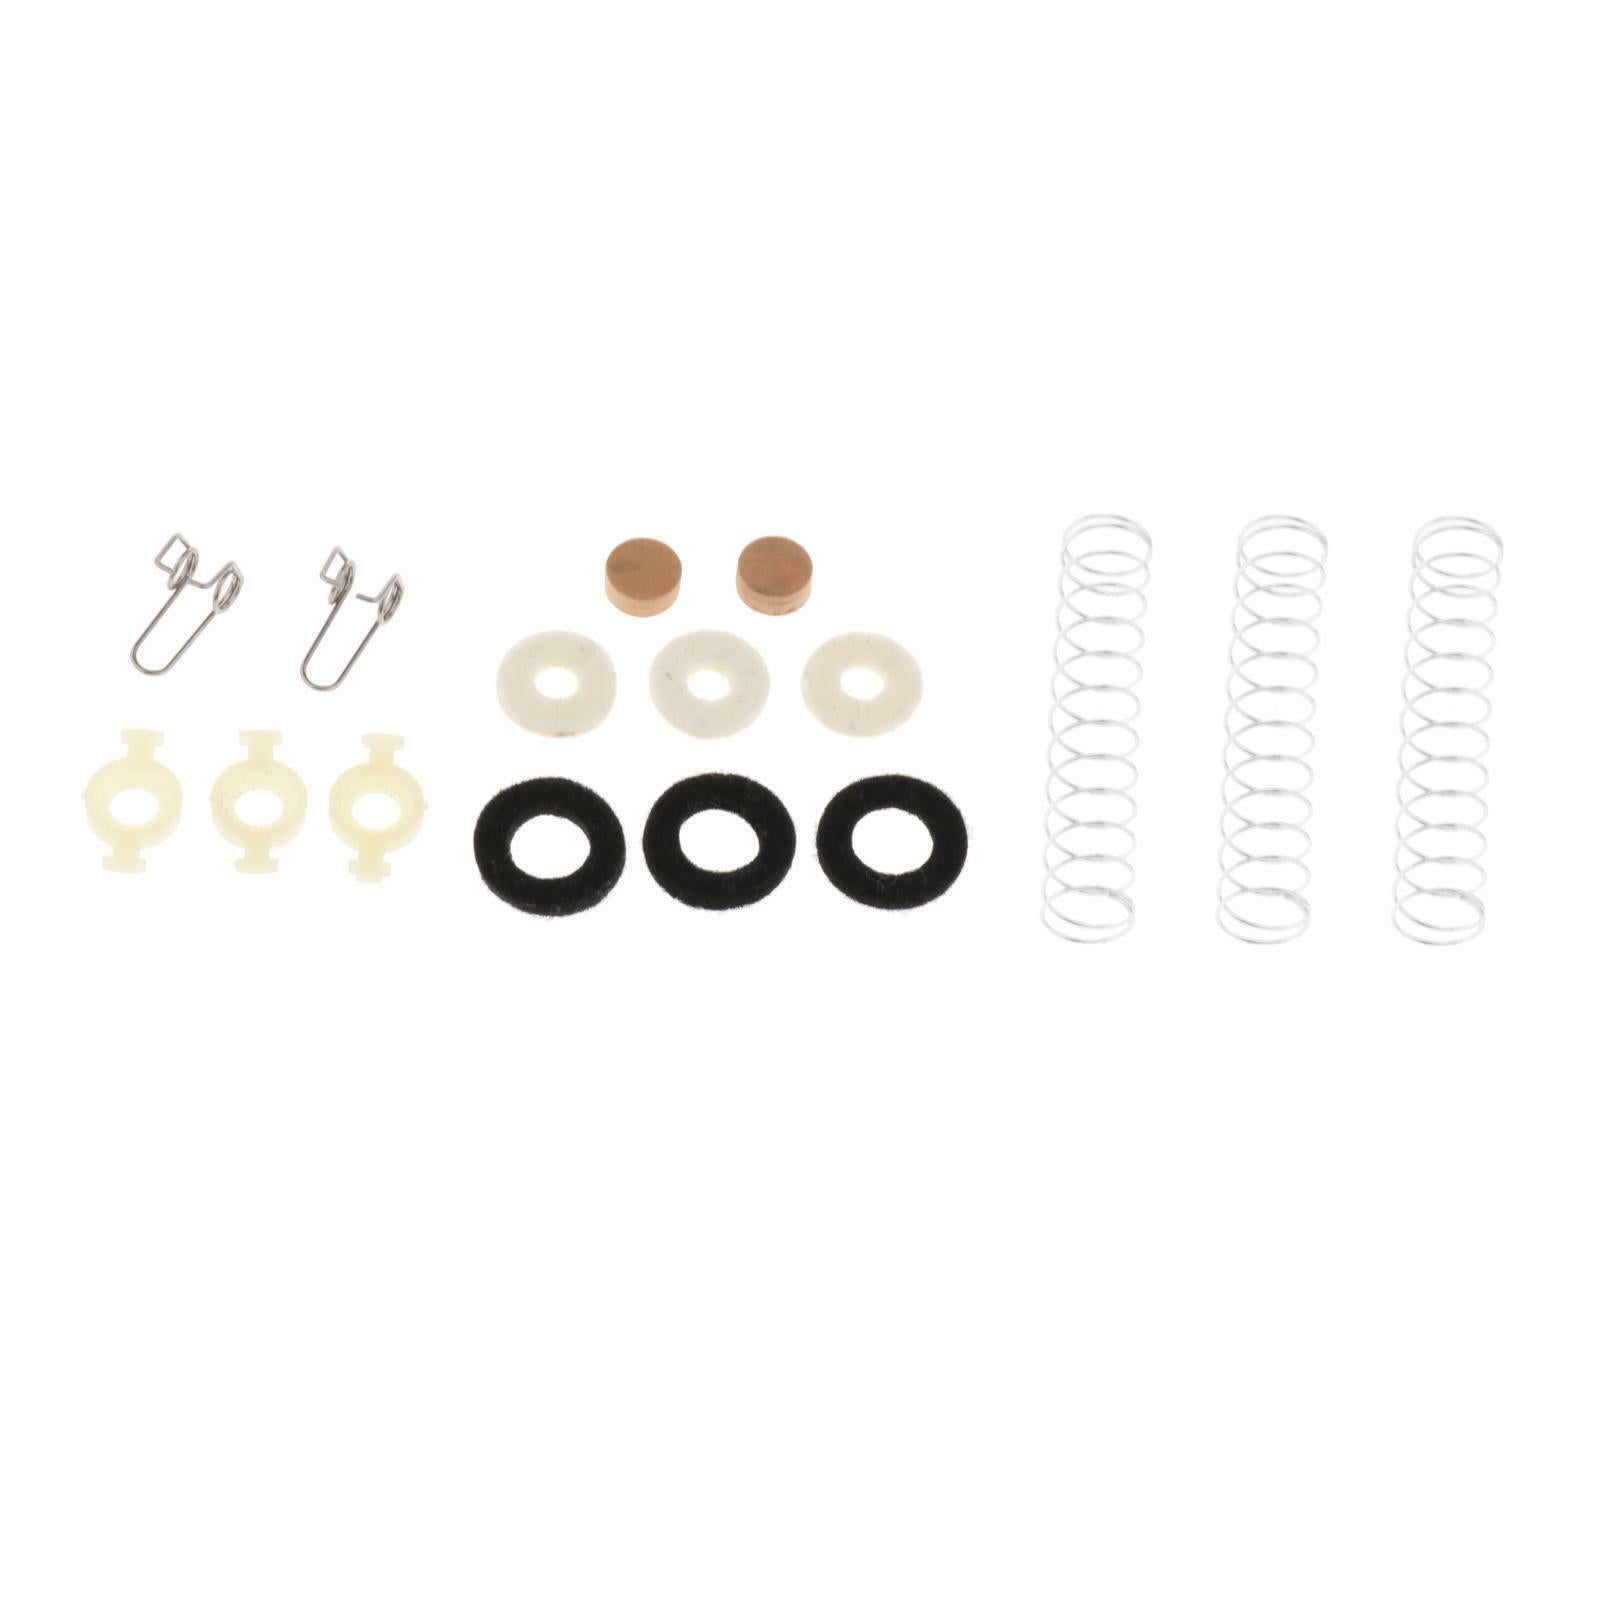 16pcs Trumpet Piston Valve Repair Kit with Spring Replacement Accessories